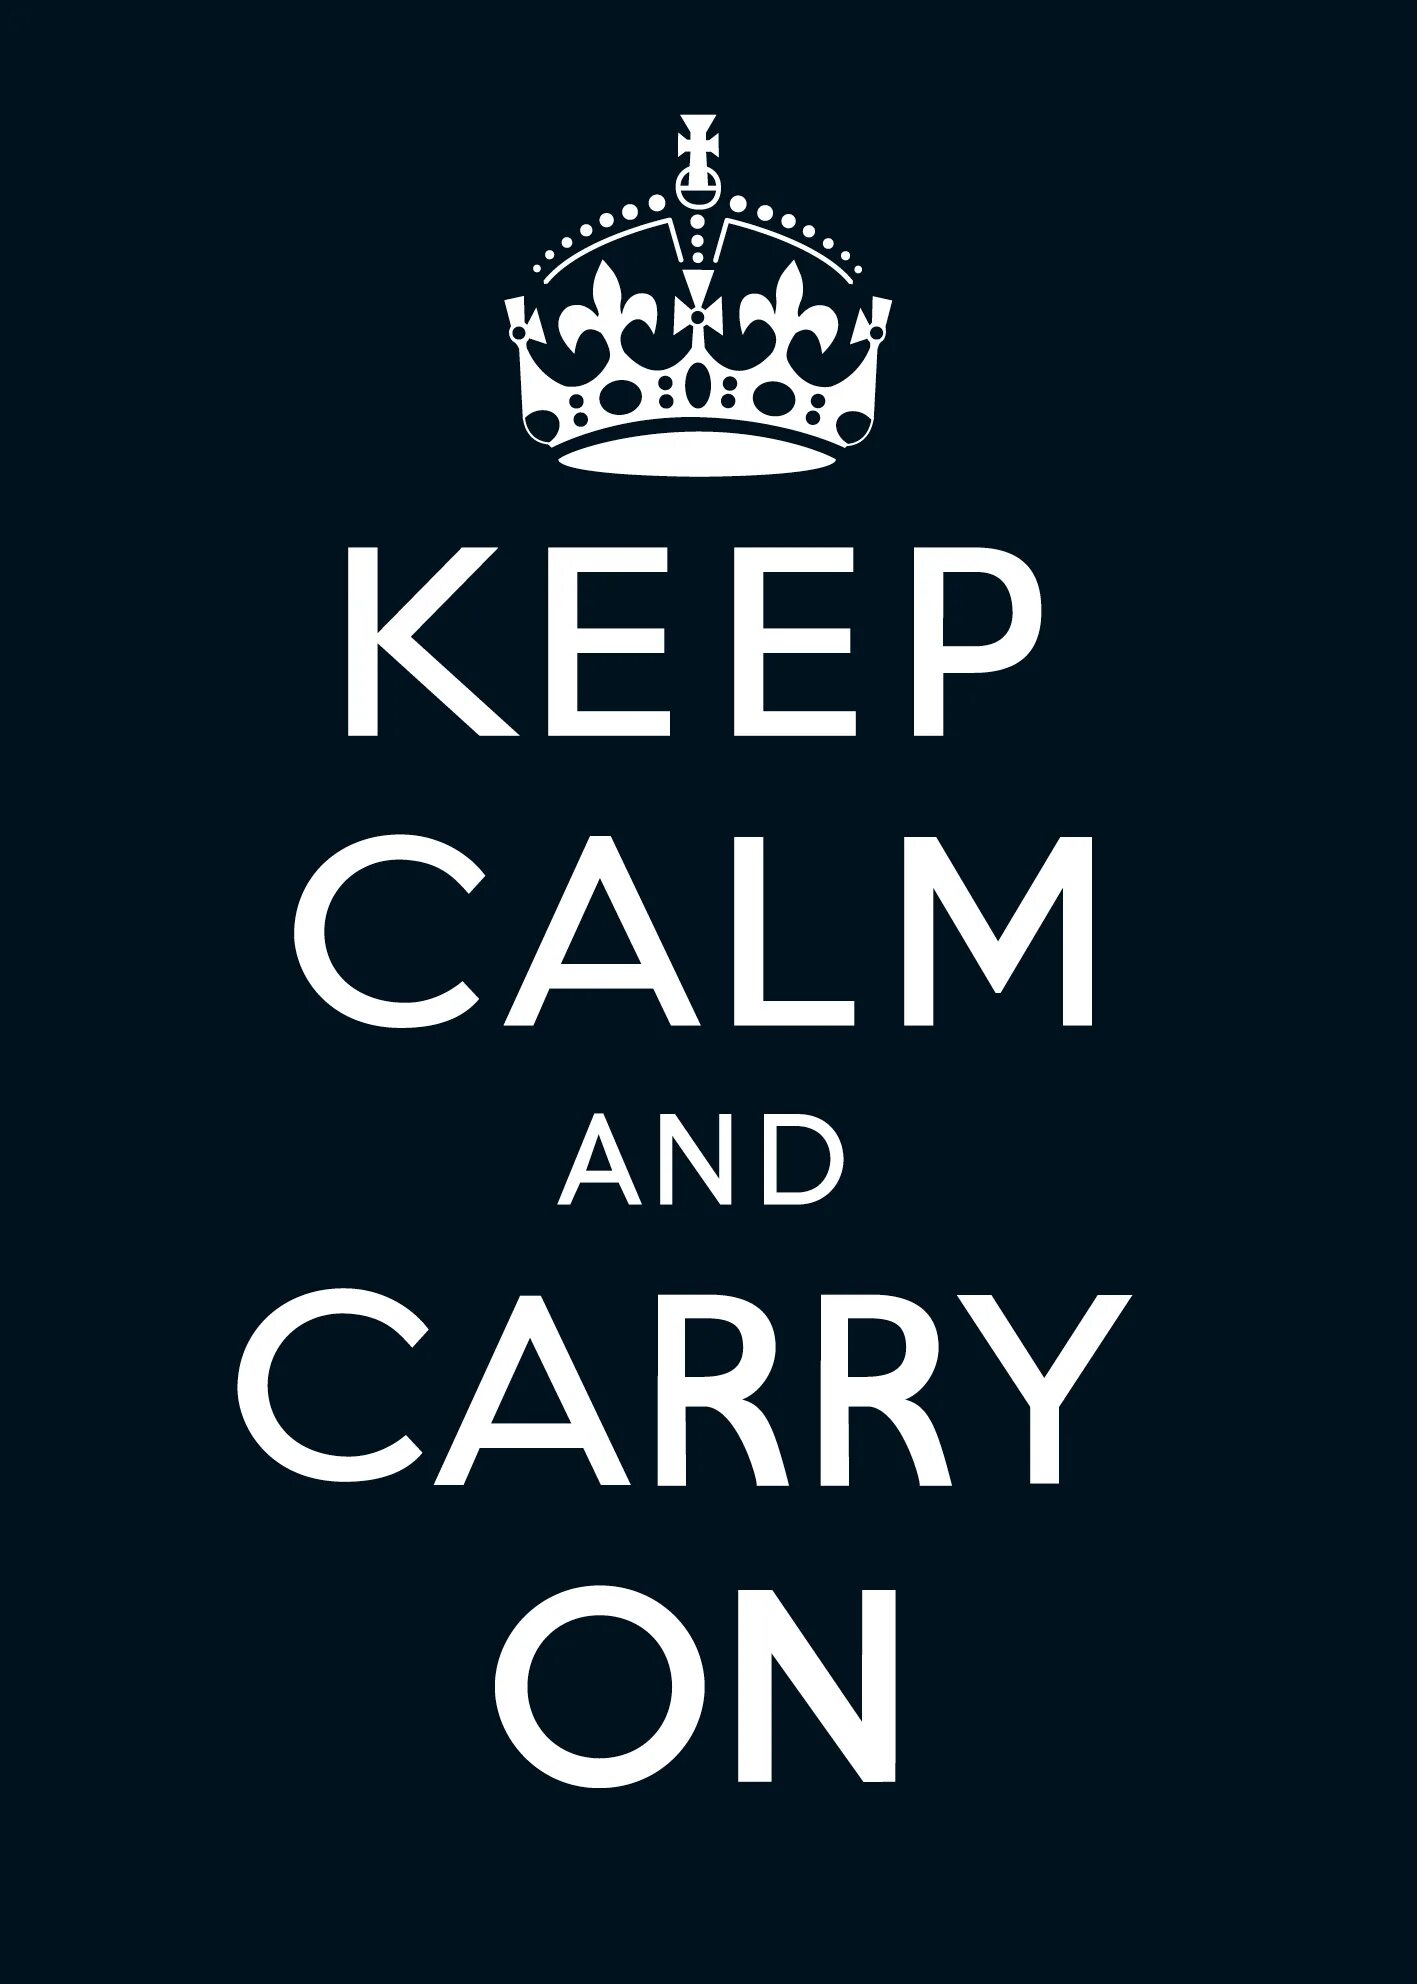 Keep Calm and carry. Кеер Calm and carry on. Keep Calm and carry on корона. Постер keep Calm.